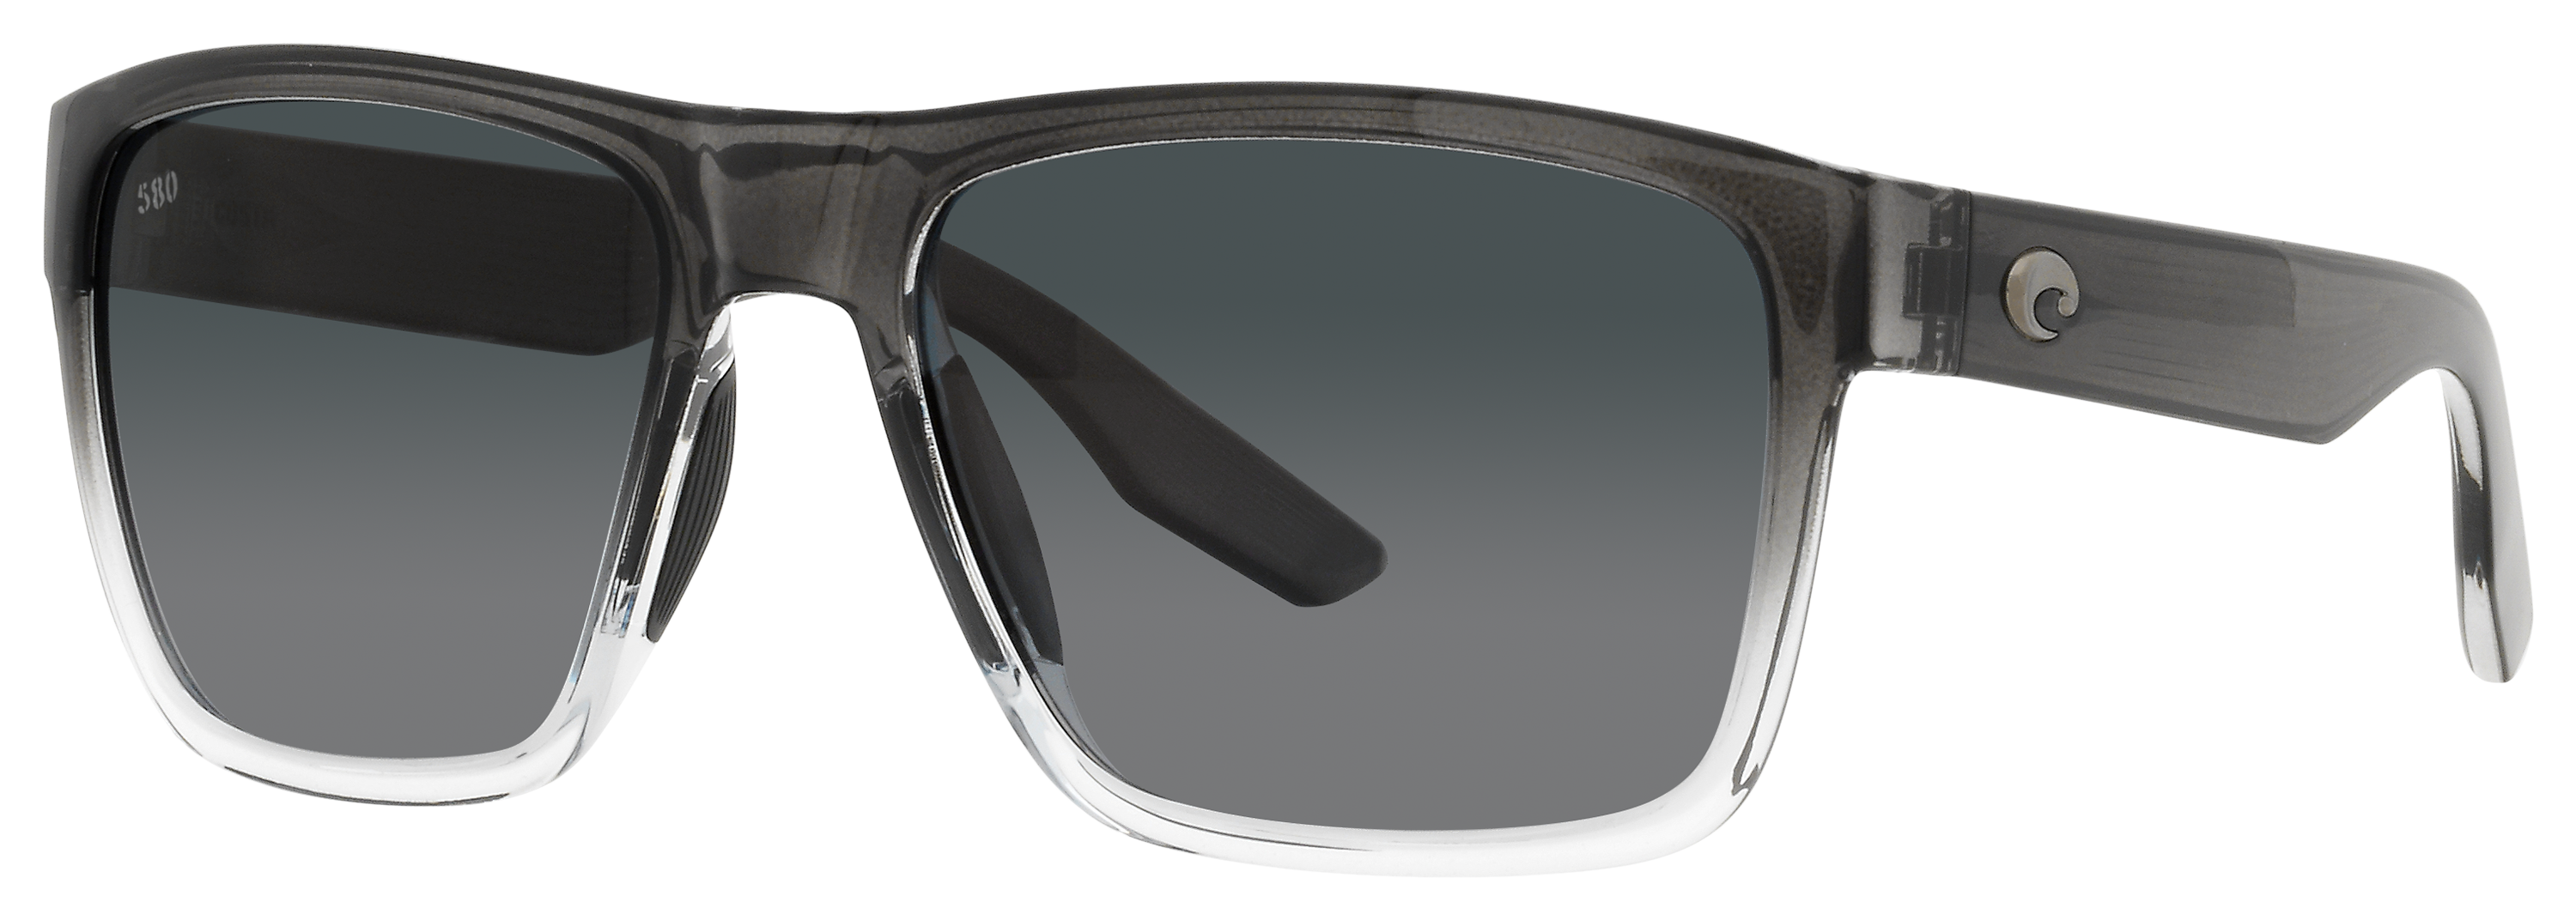 Costa Del Mar Paunch XL 580G Glass Polarized Sunglasses